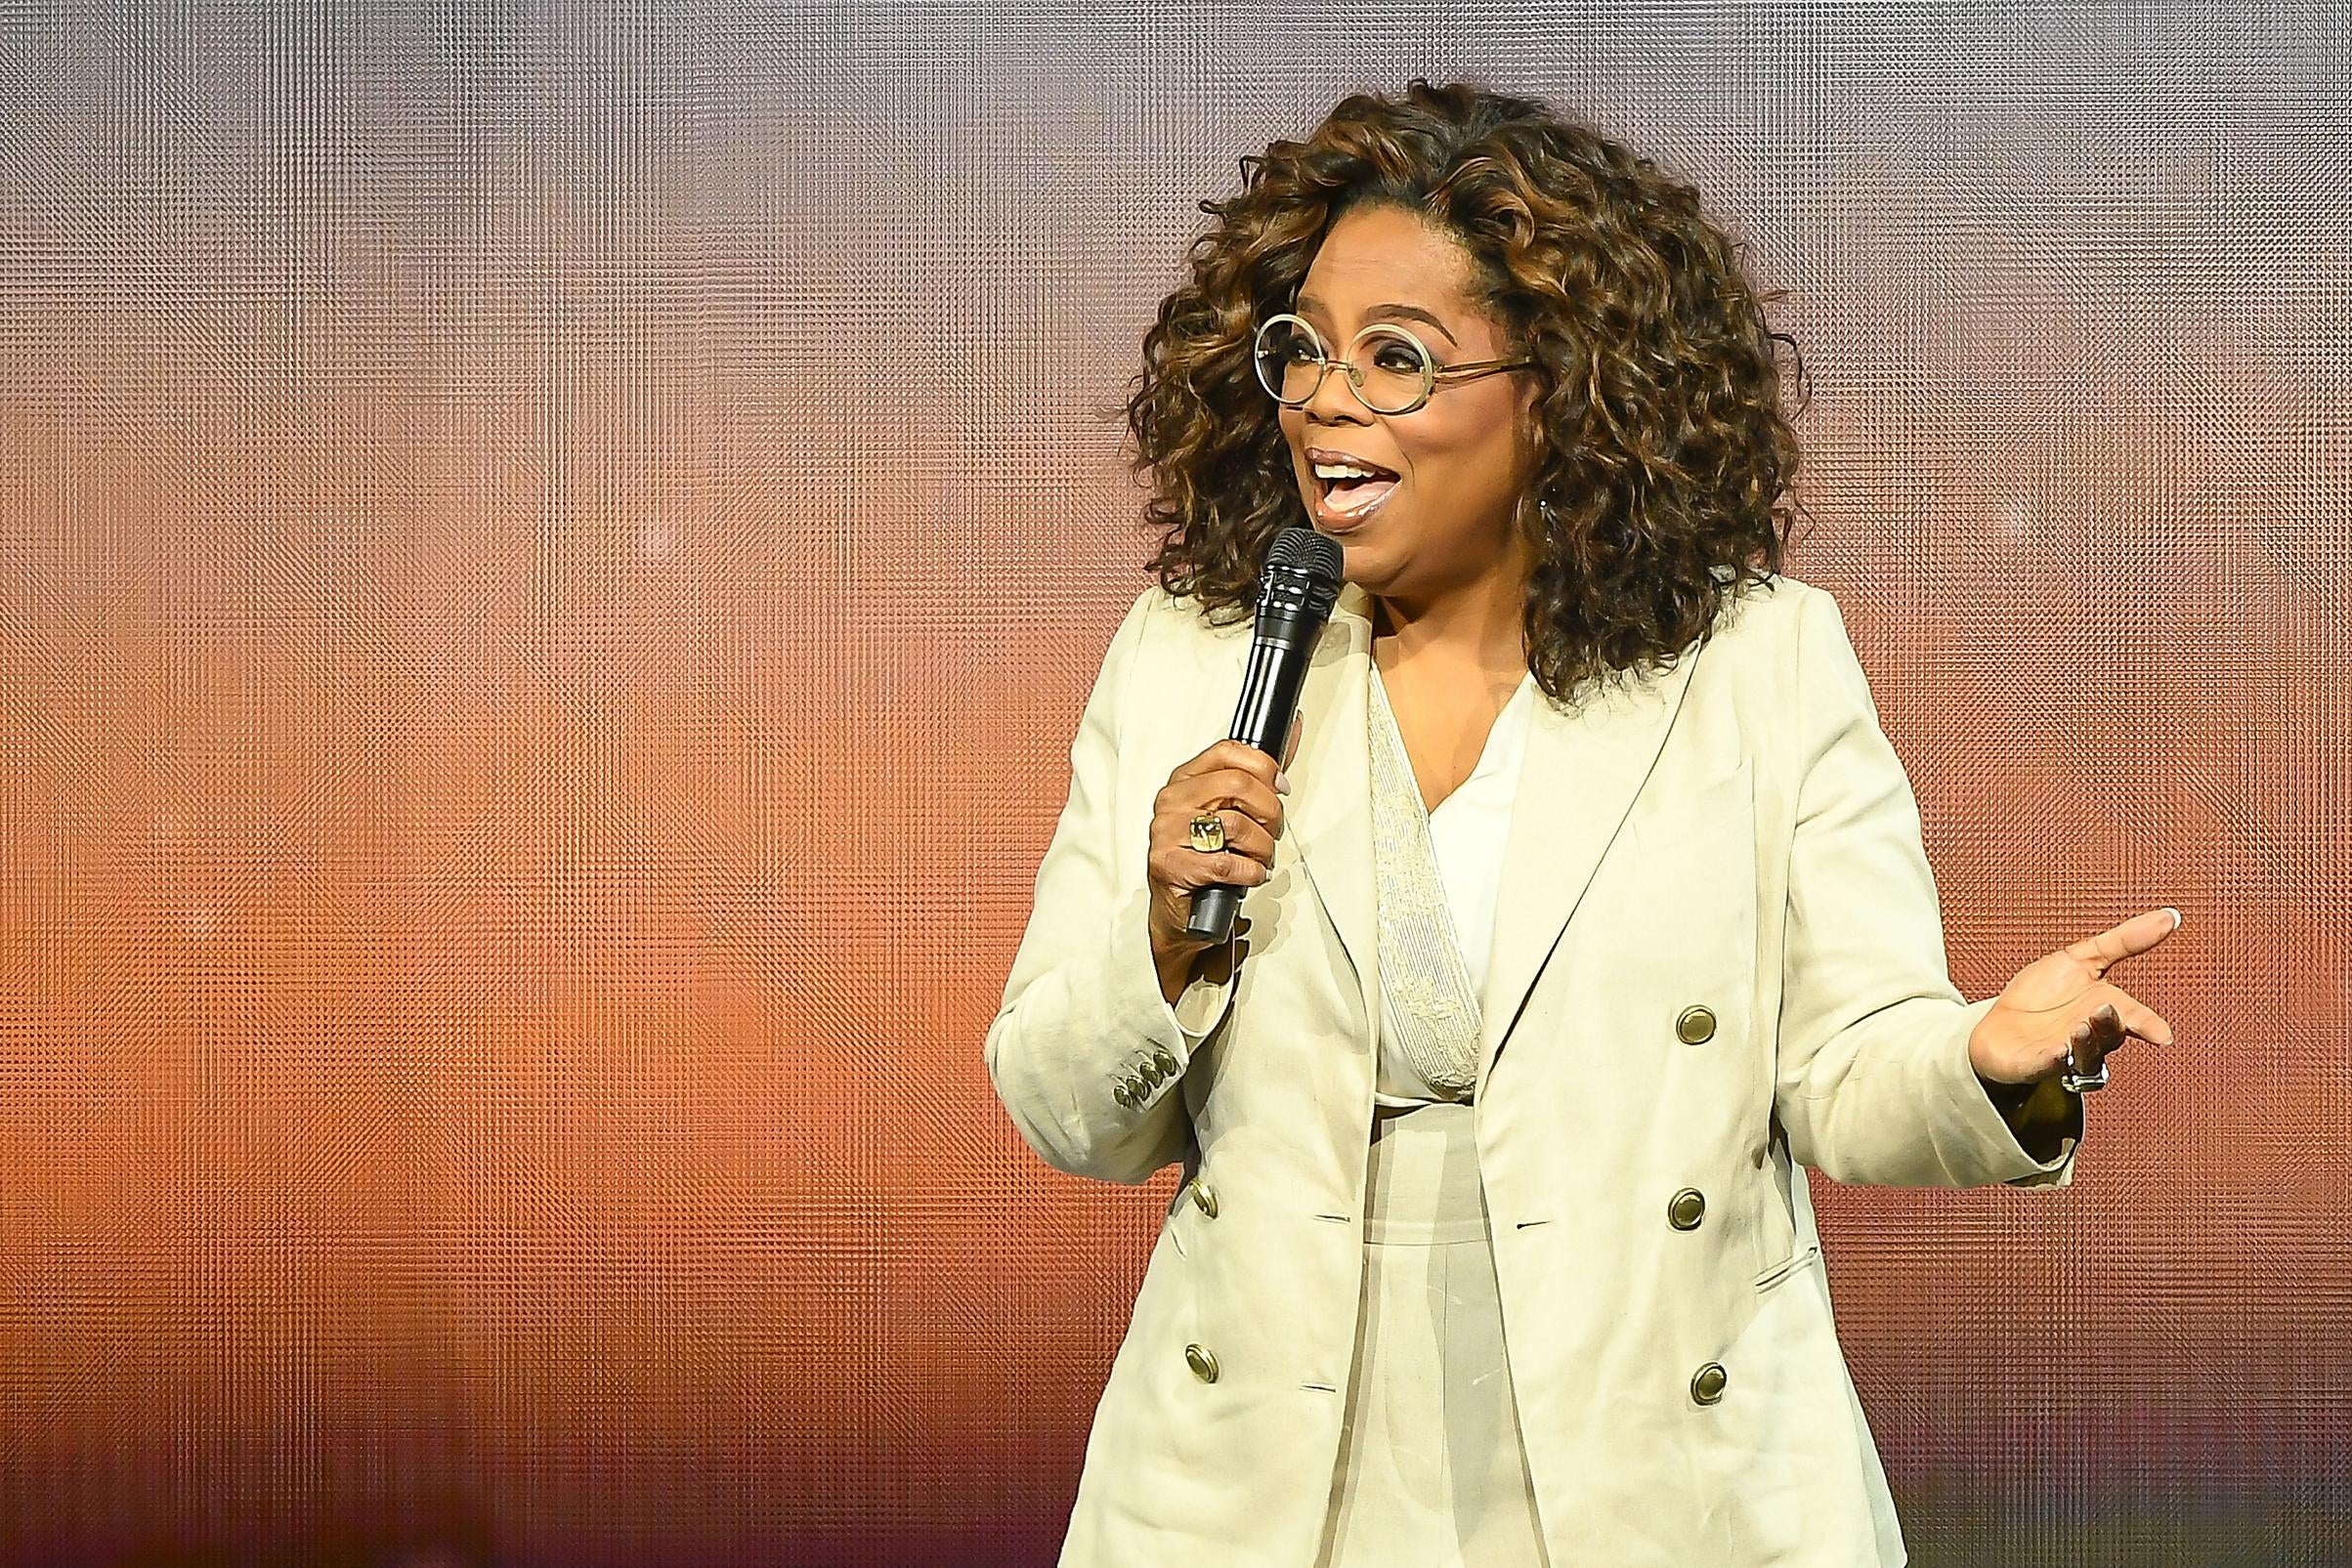 Oprah Winfrey dressed in beige blazer and round glasses talks into a microphone.